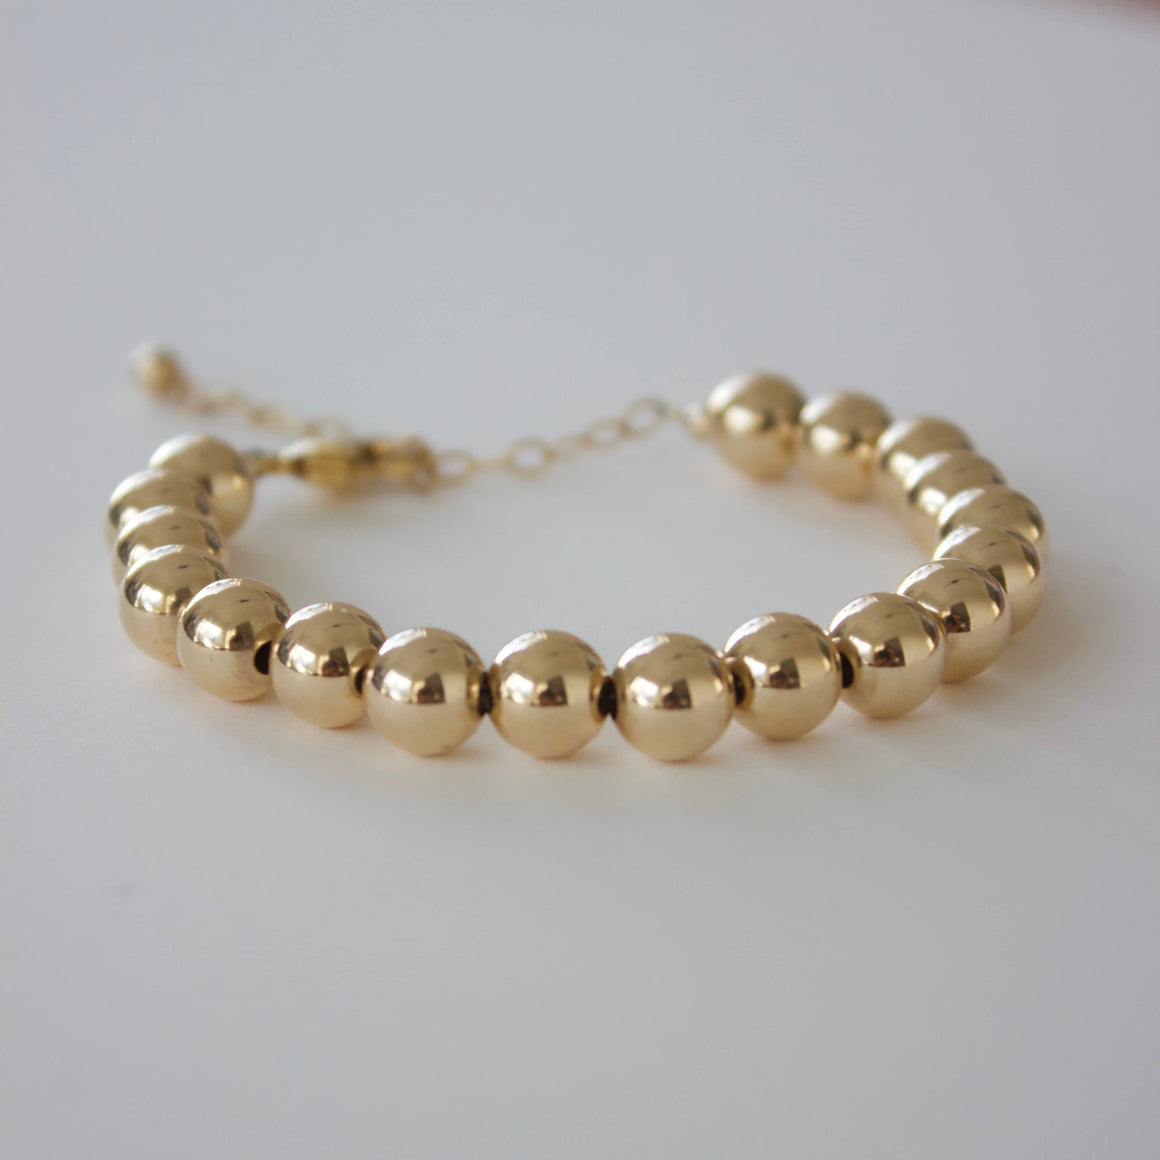 Chunky Gold Bead Bracelet